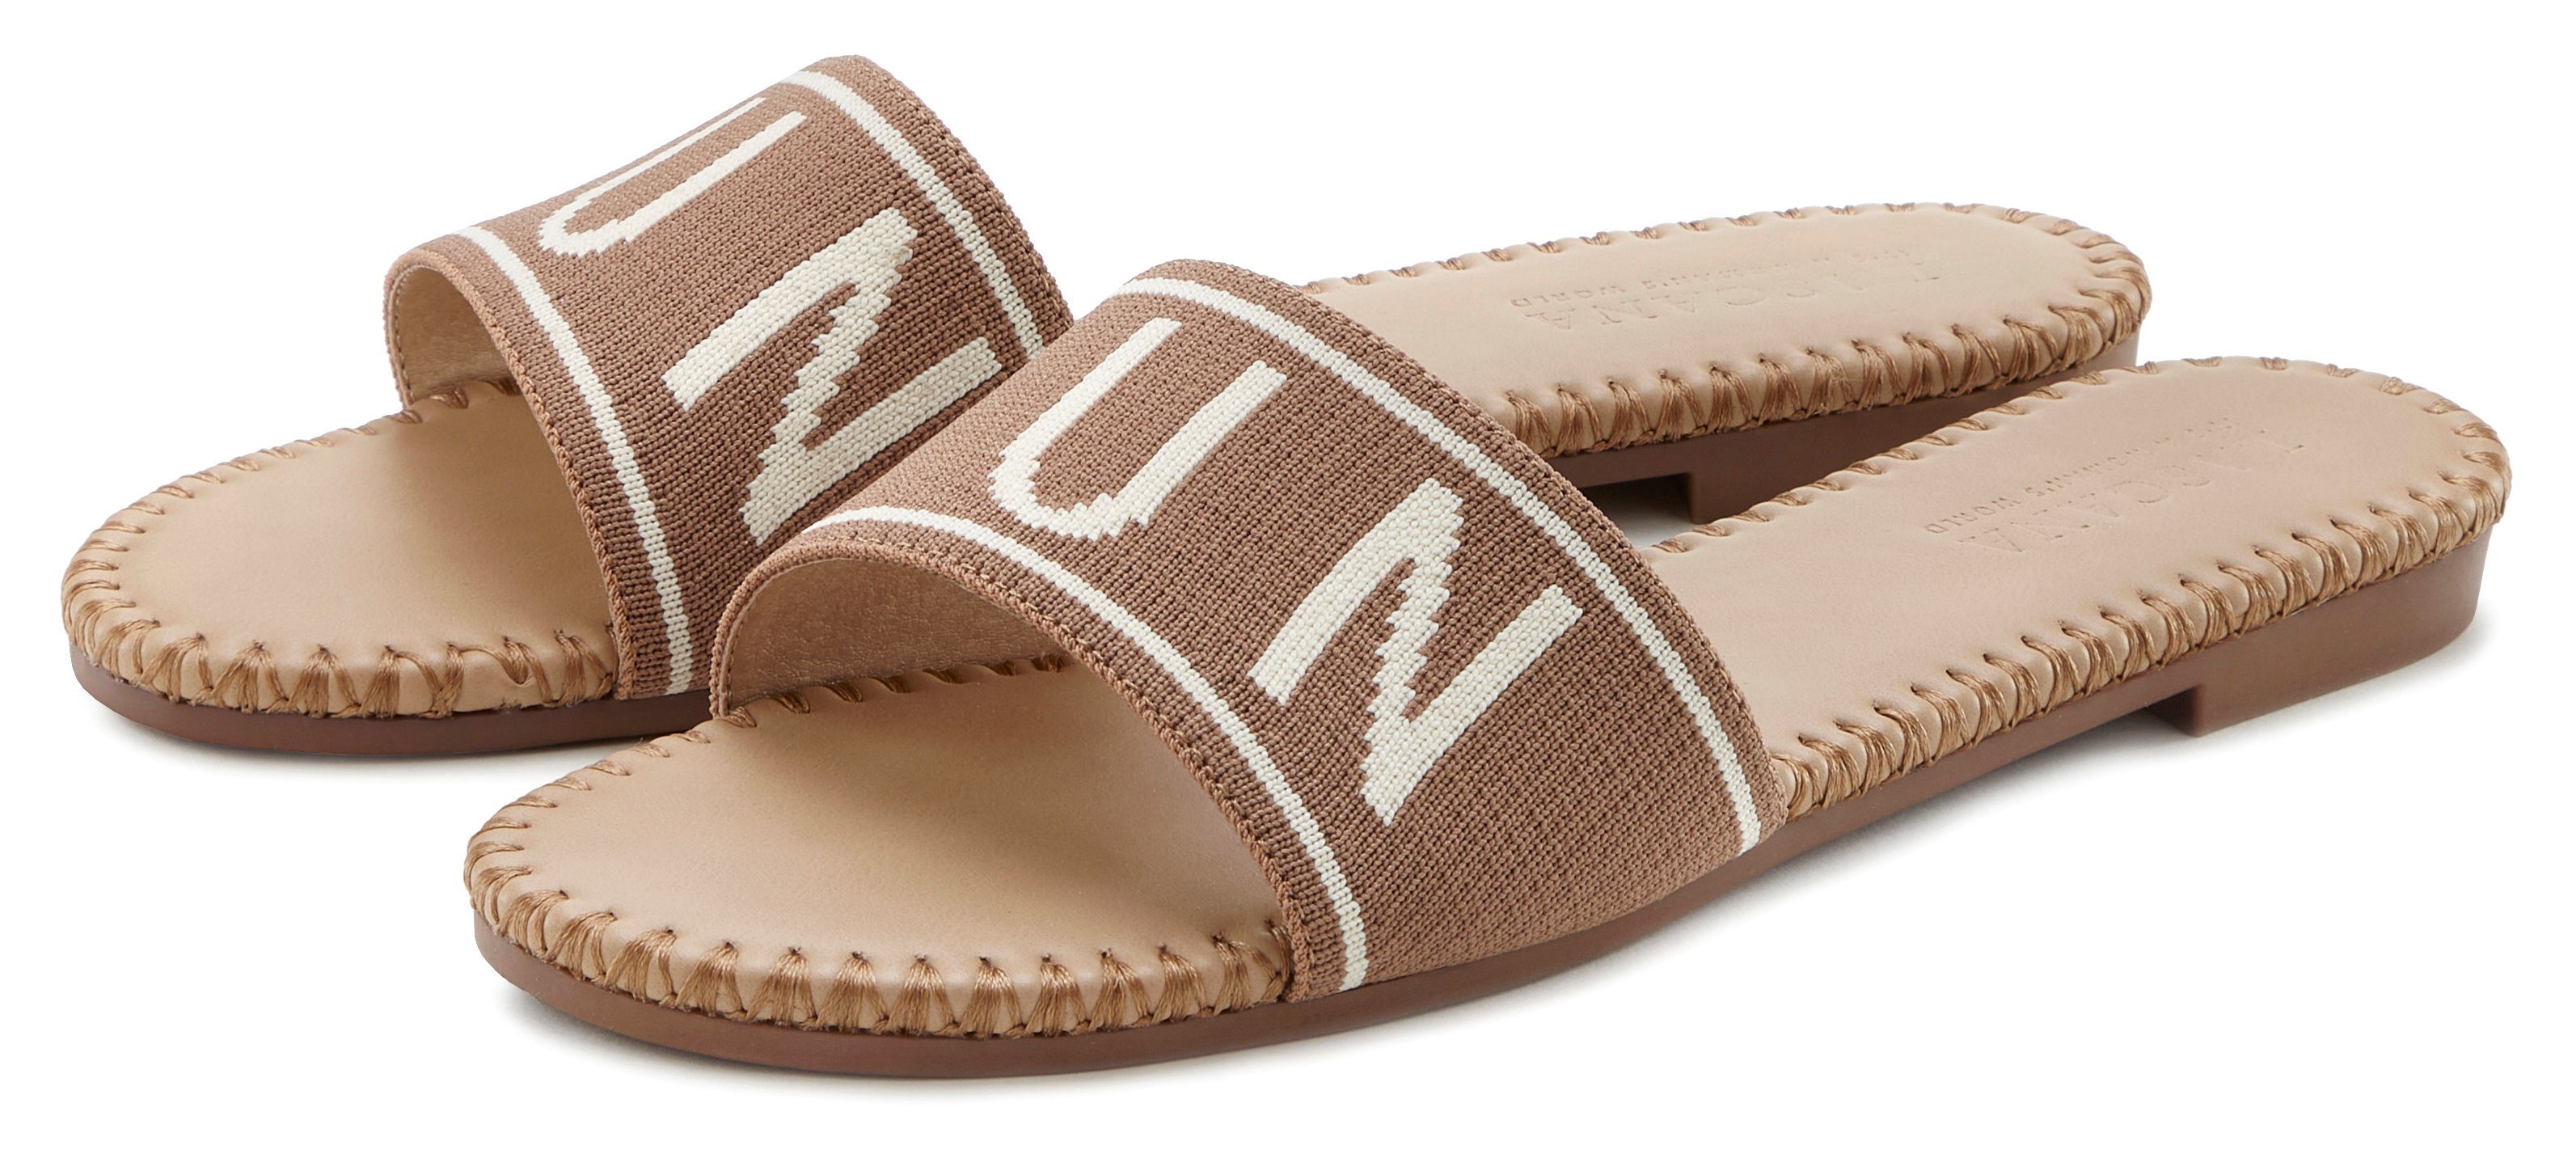 LASCANA Pantolette Mule, Sandale, offener Schuh aus Textil mit modischem Schriftzug VEGAN taupe